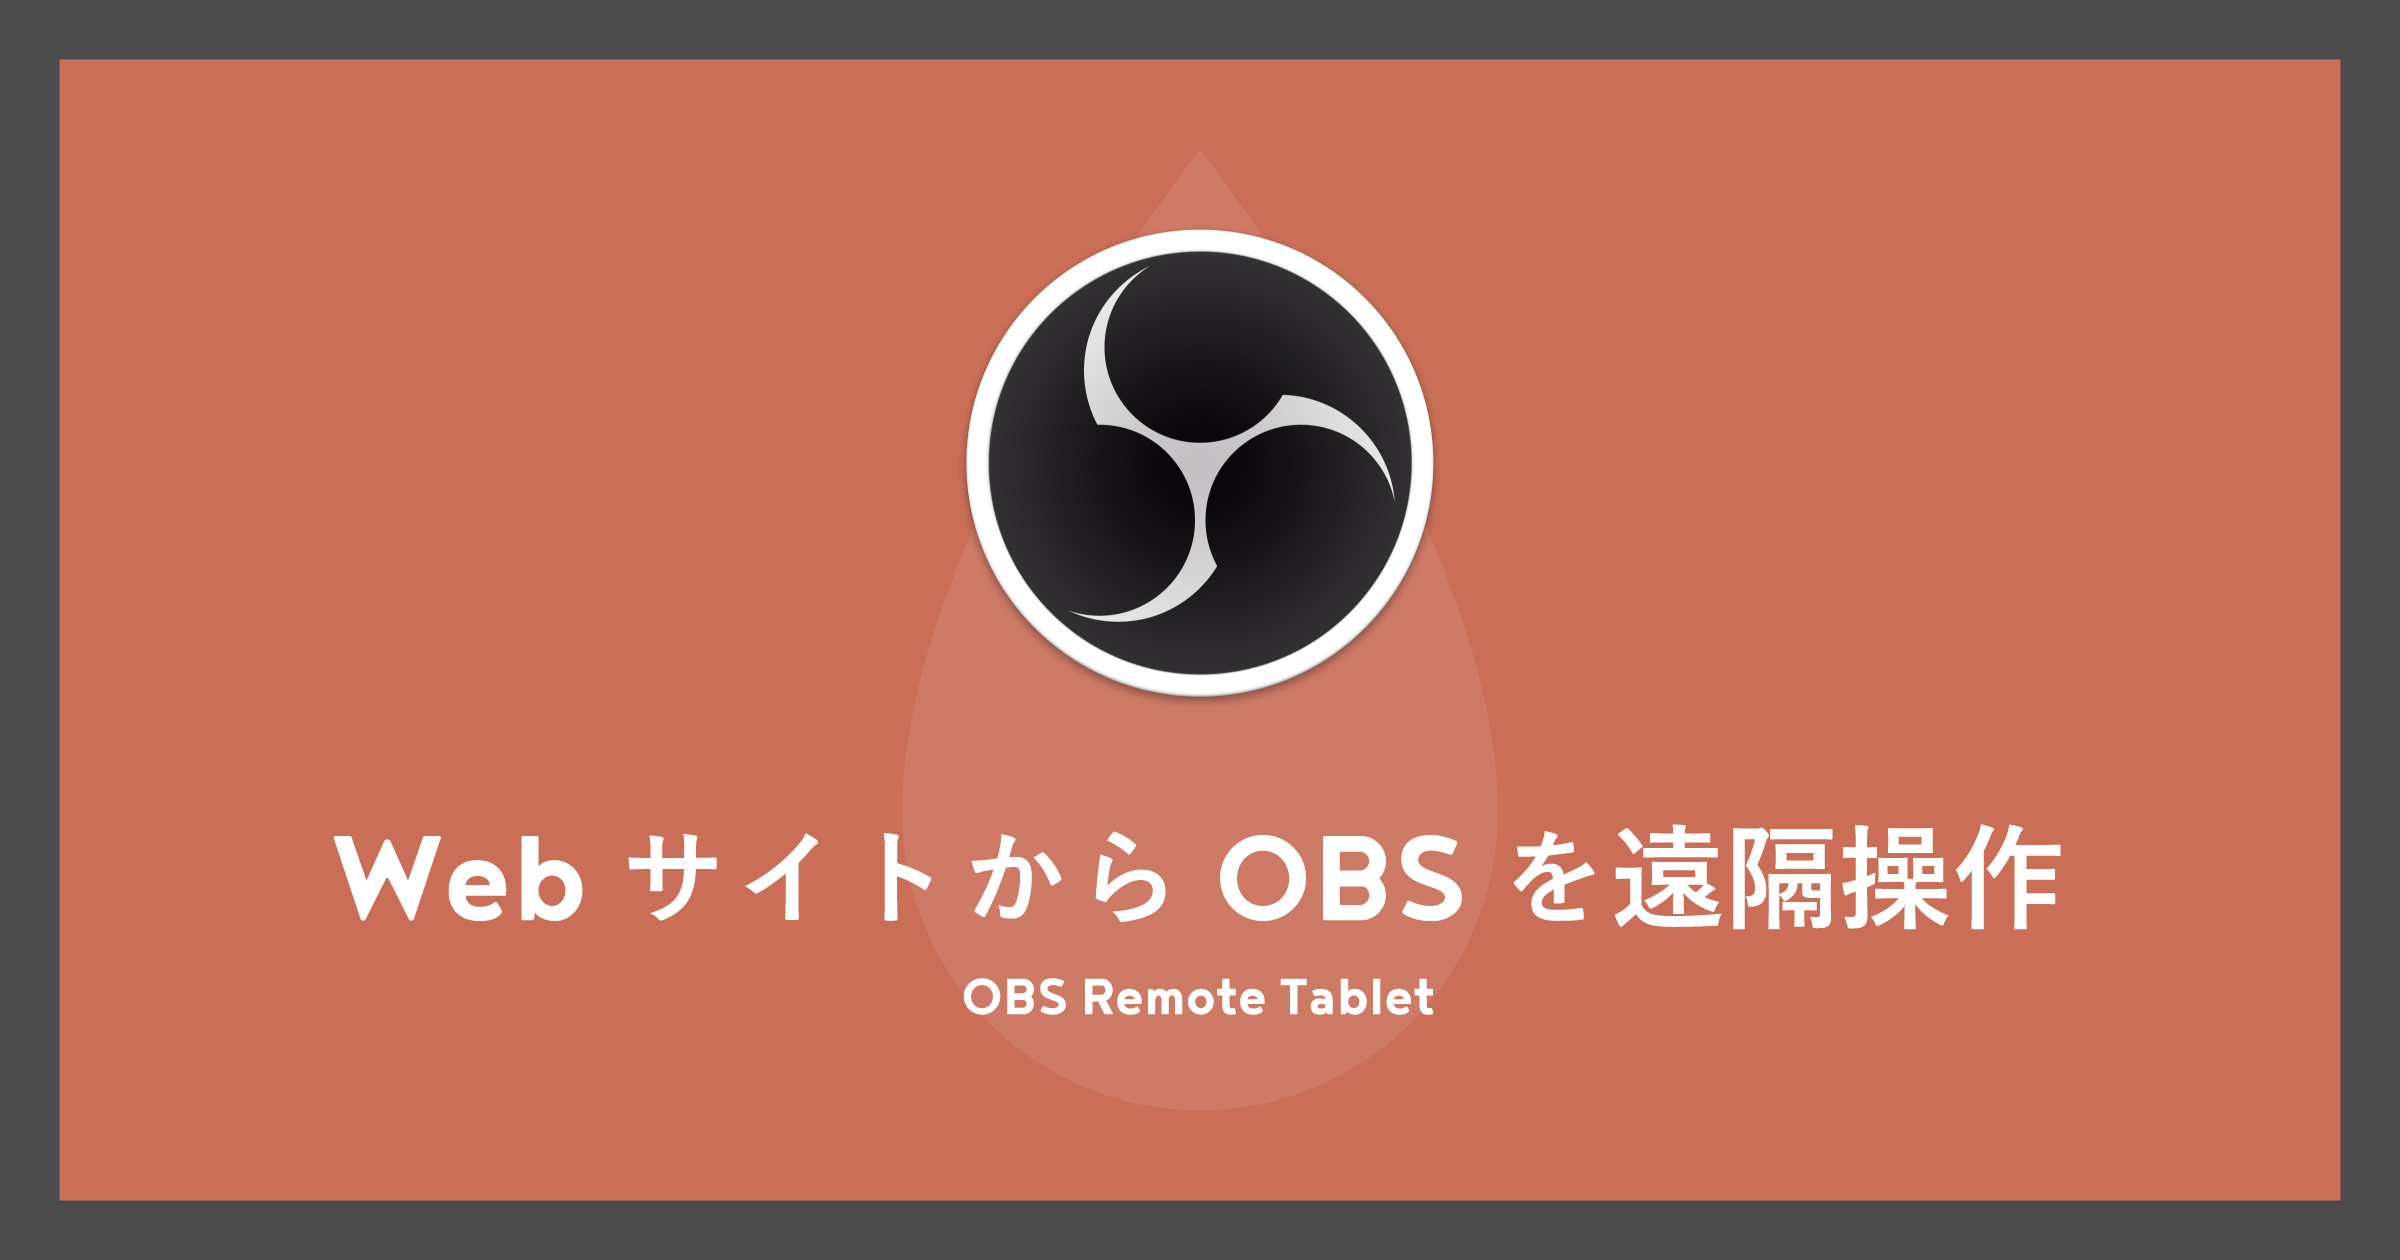 「[OBS]スマホやタブレットからWebサイト上で遠隔操作、OBS Remote Tablet」のアイキャッチ画像